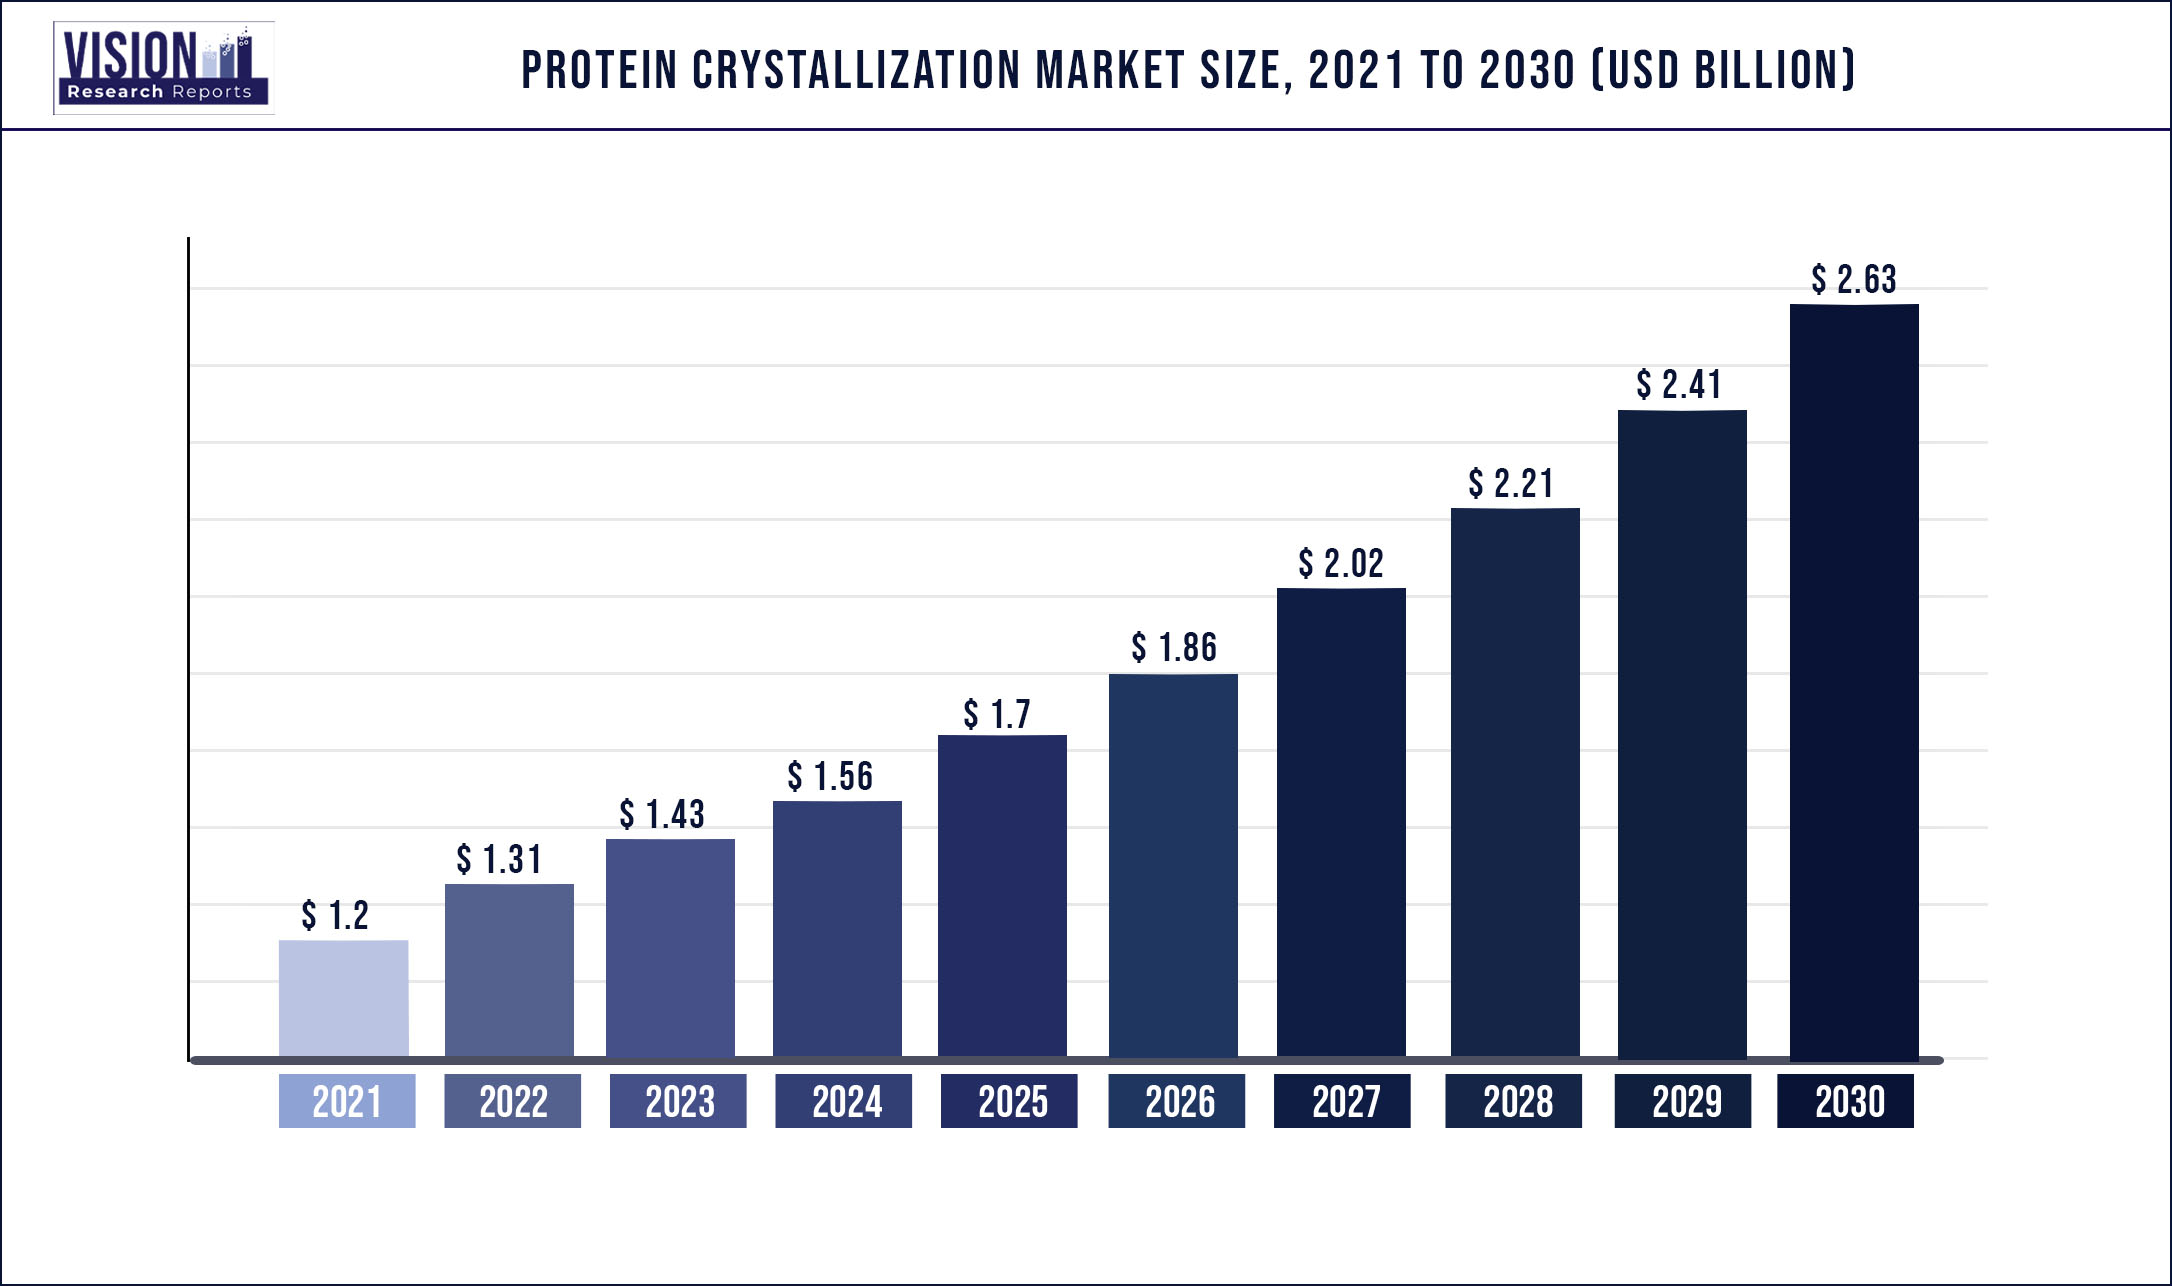 Protein Crystallization Market Size 2021 to 2030